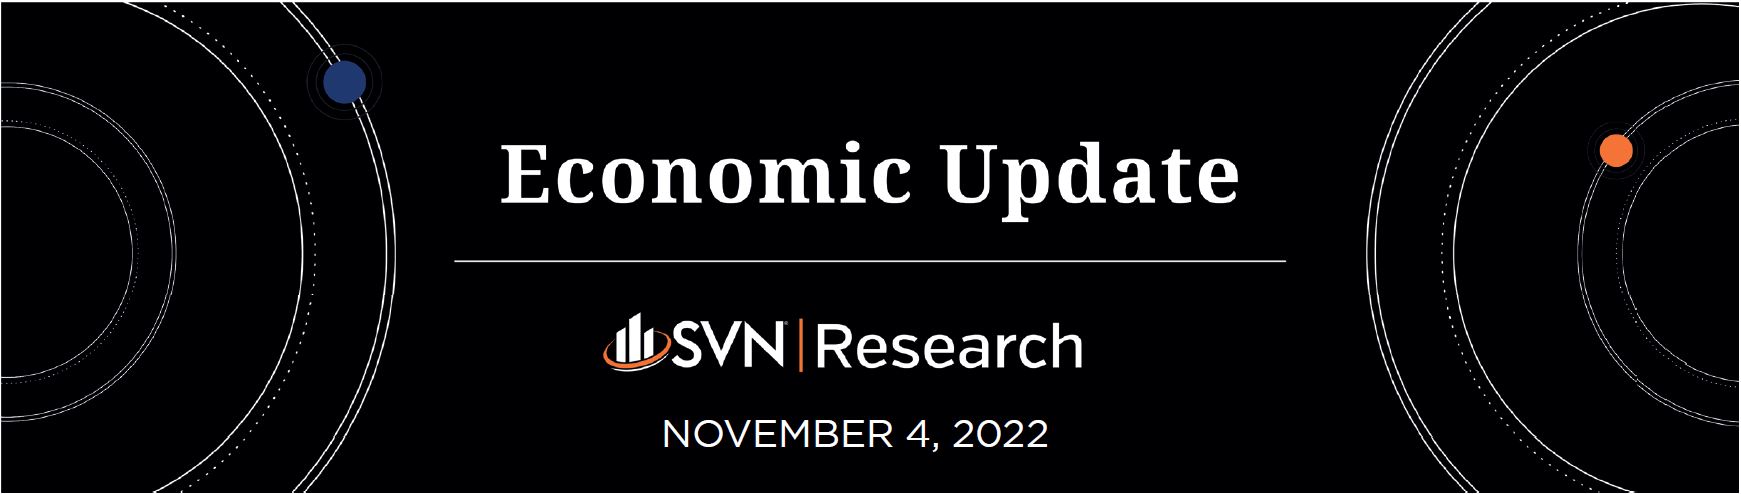 SVN | Research Economic Update 11.04.2022